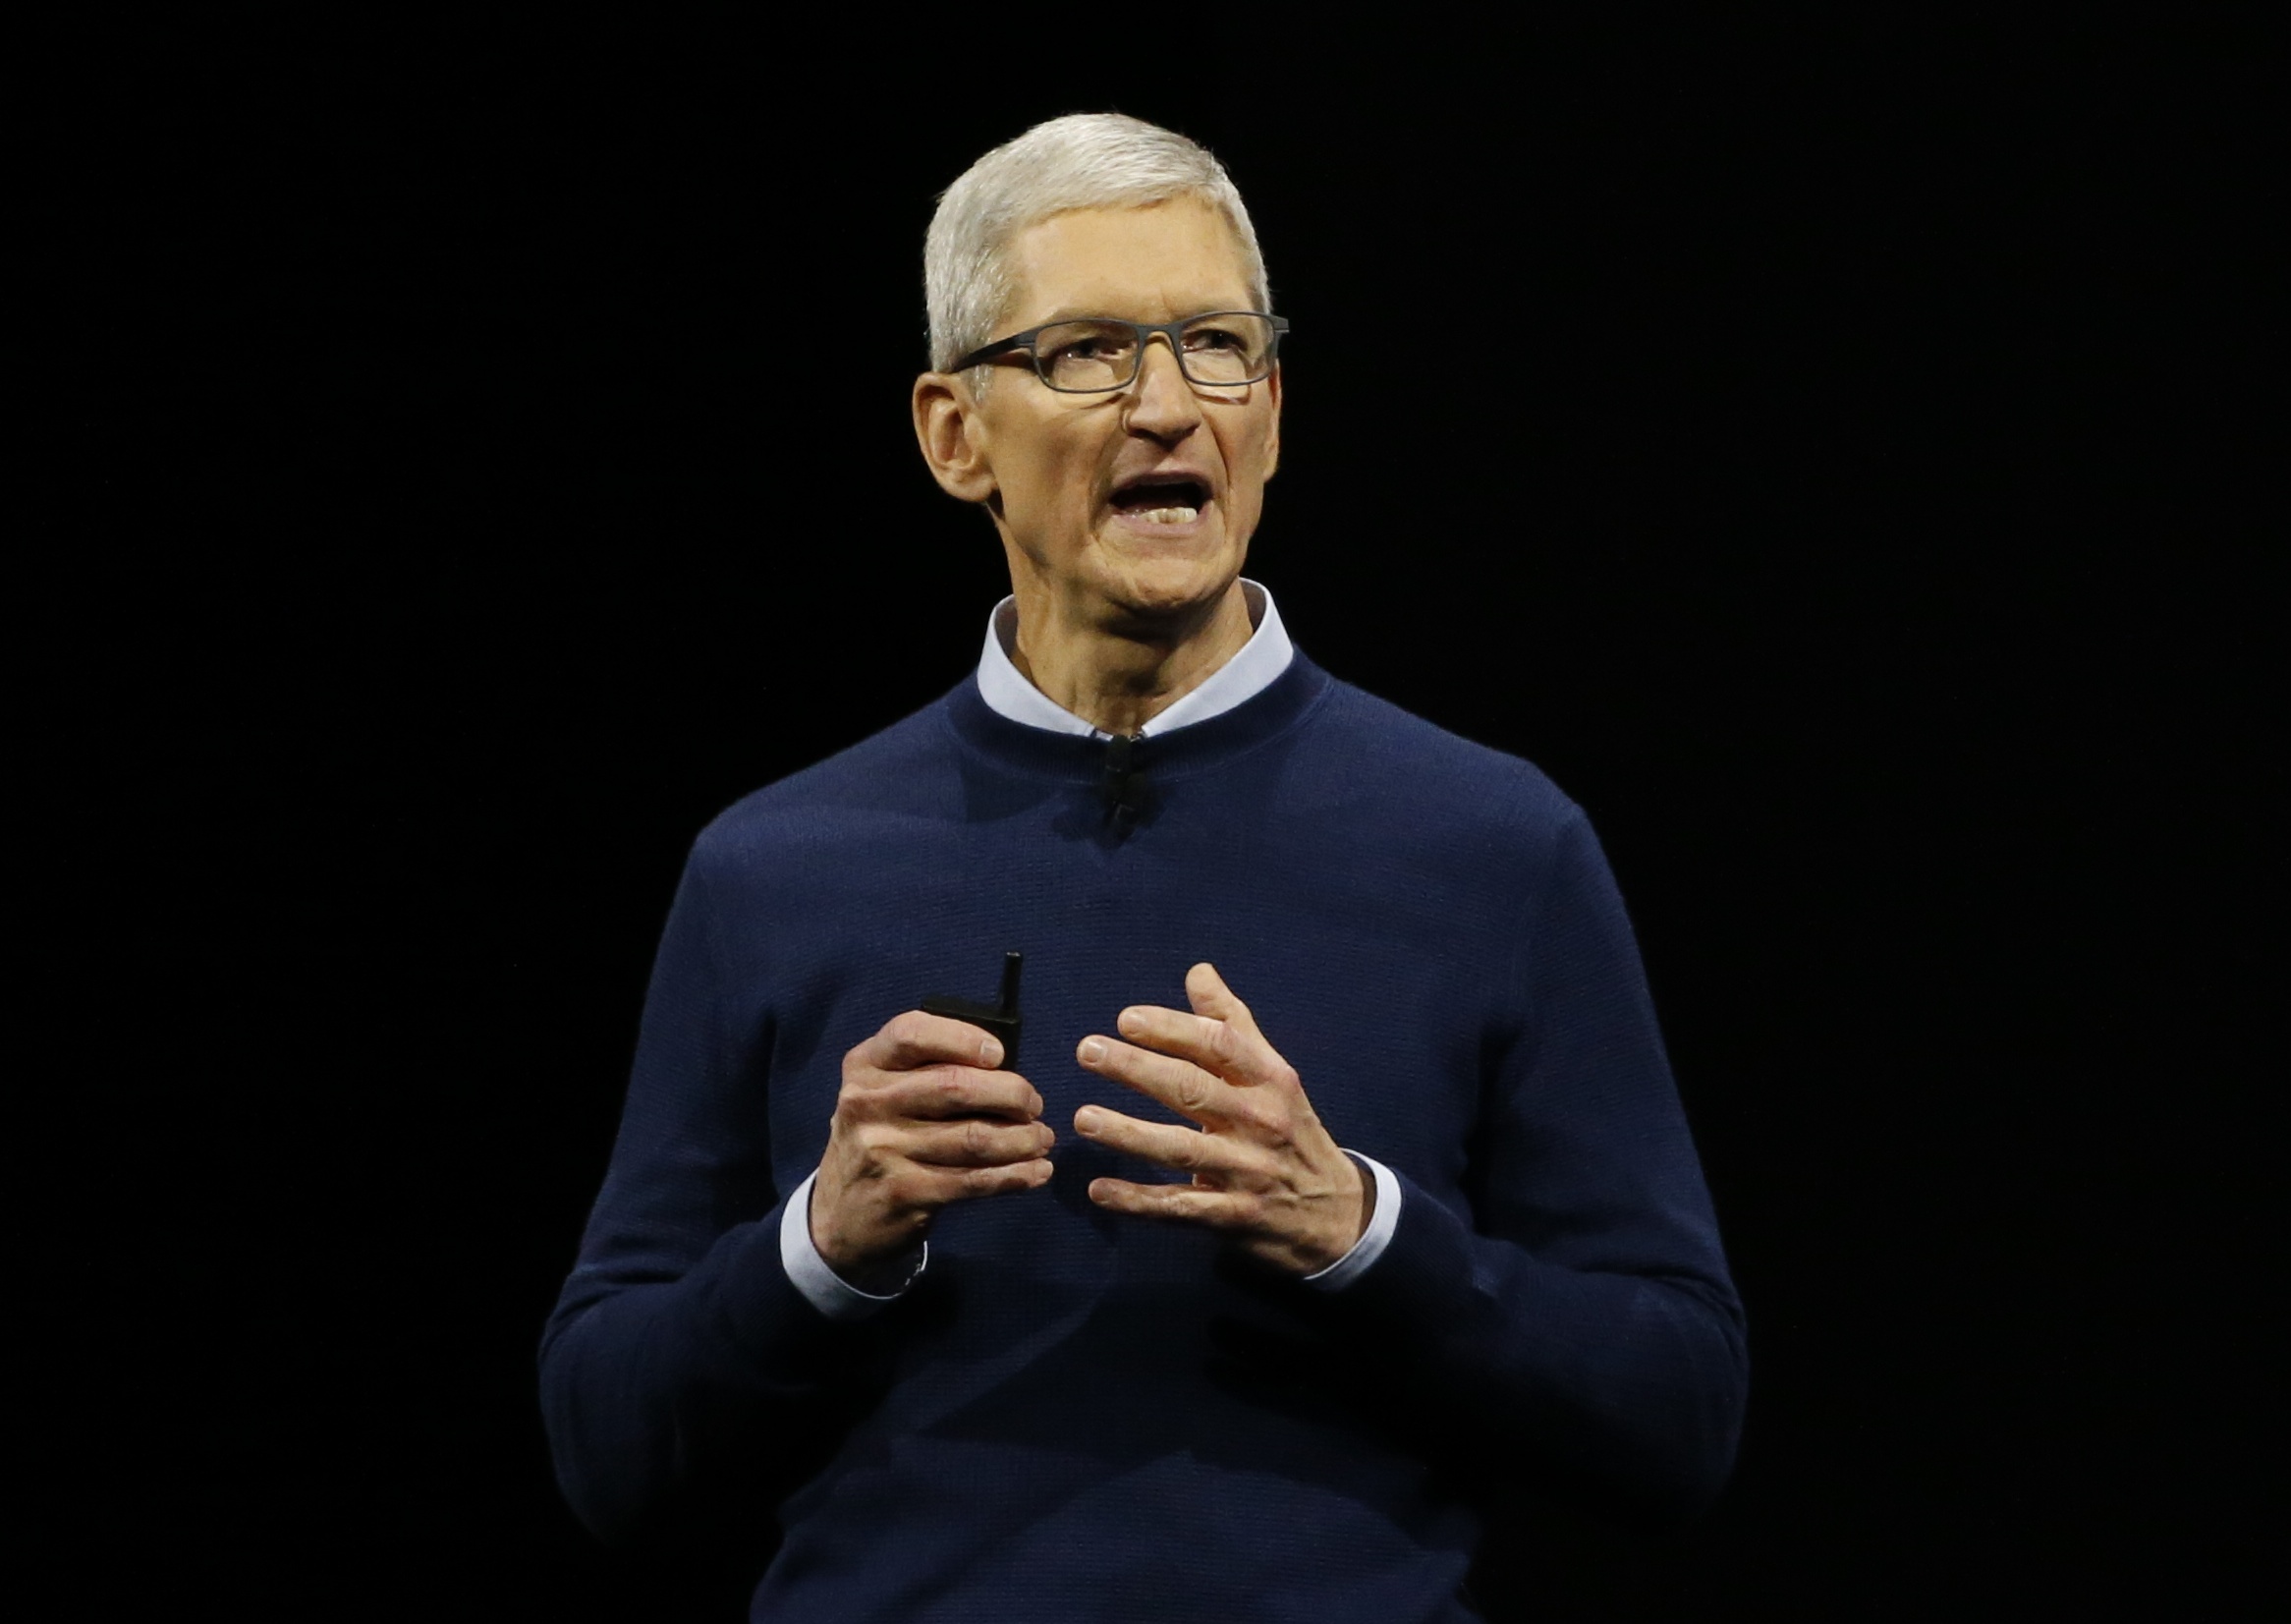 Apple's Tim Cook got big pay bump in 2018